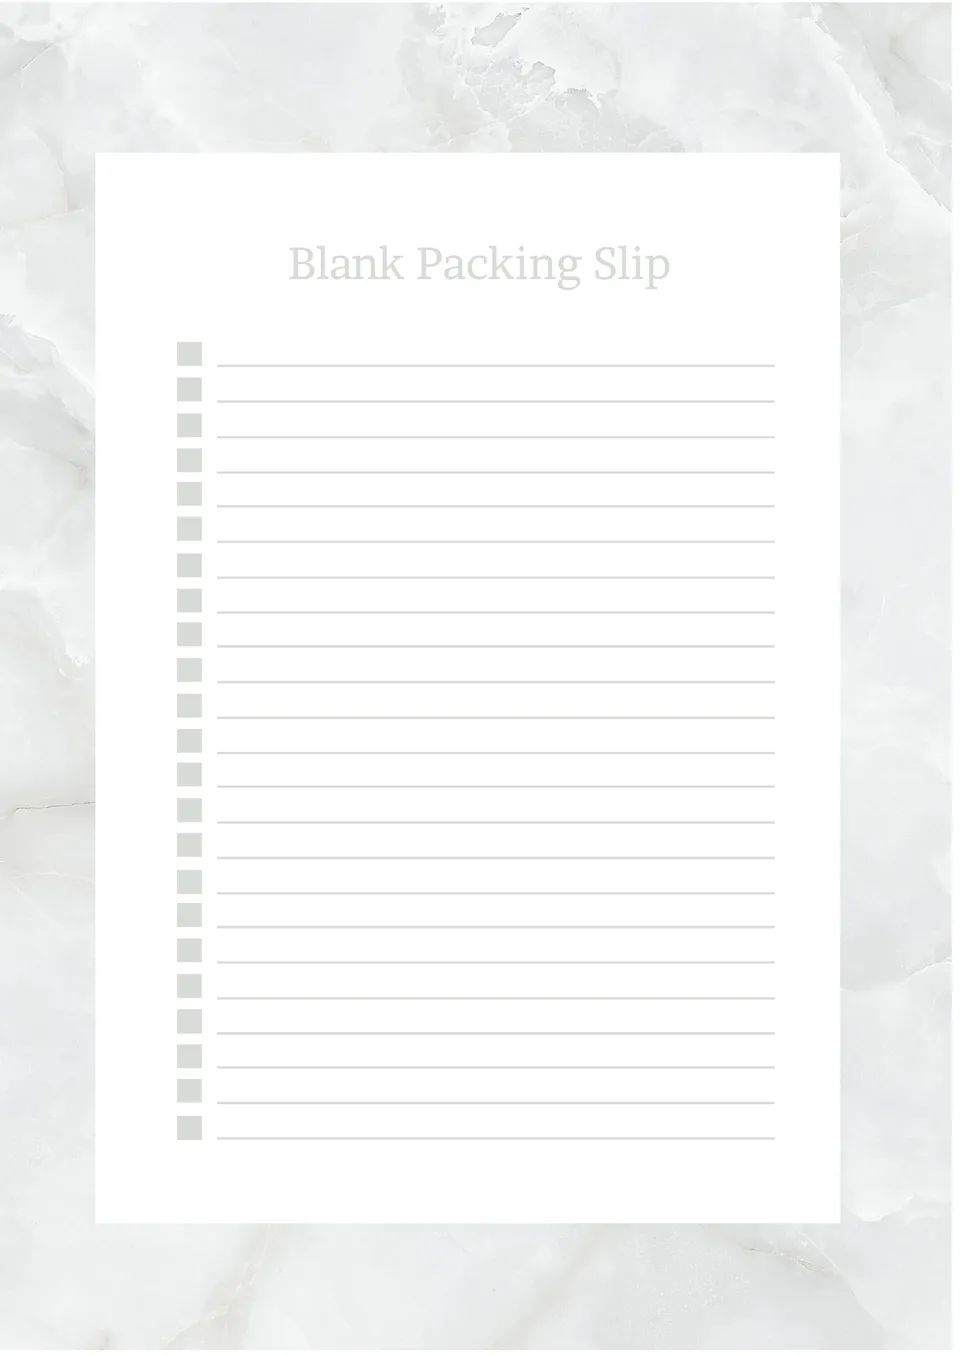 Blank Packing Slip Template